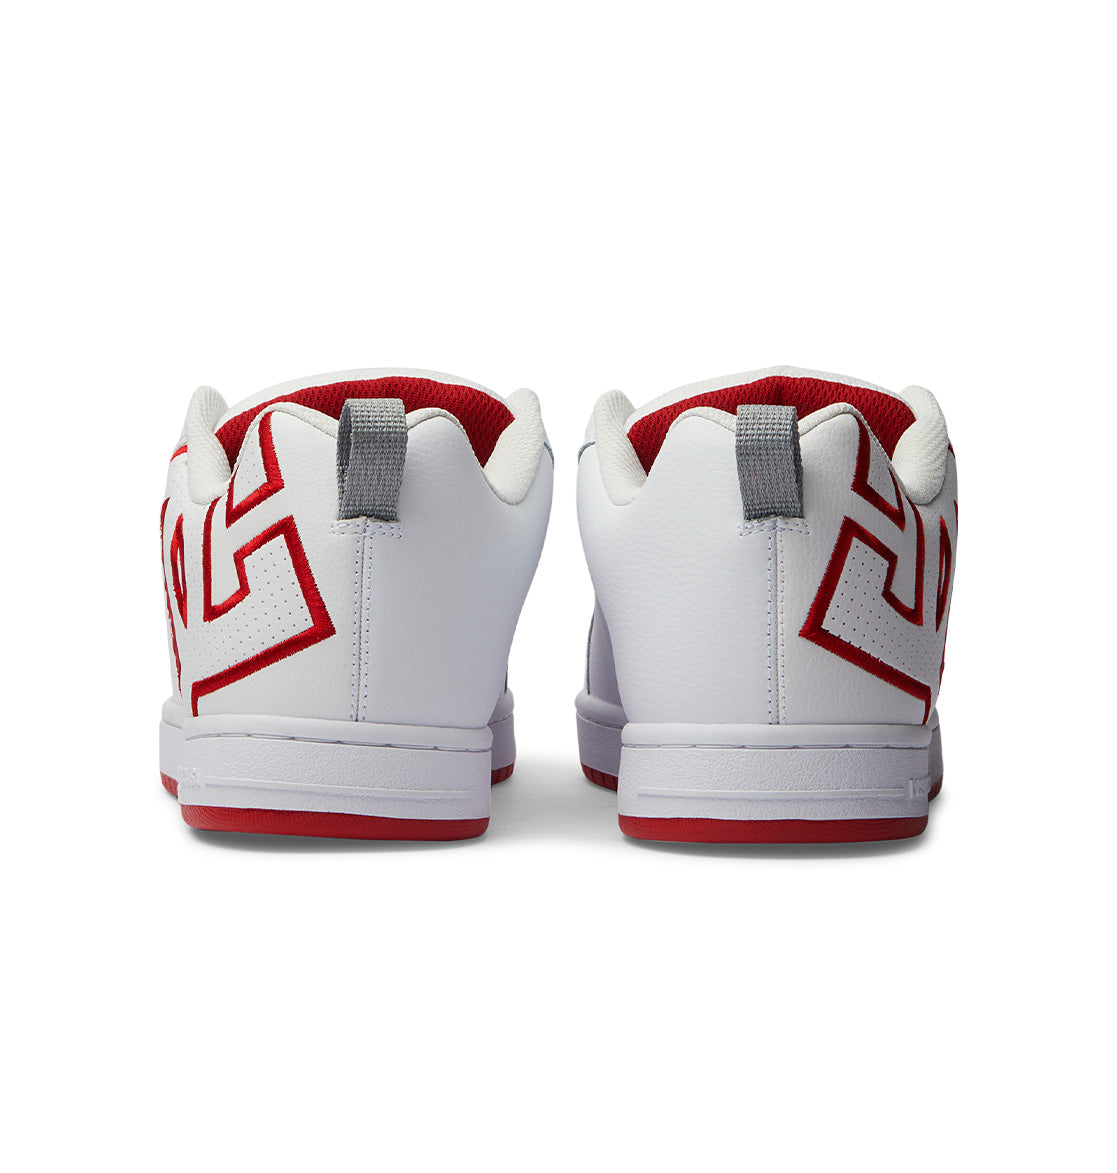 Men's Court Graffik Shoes - White/Red/Grey